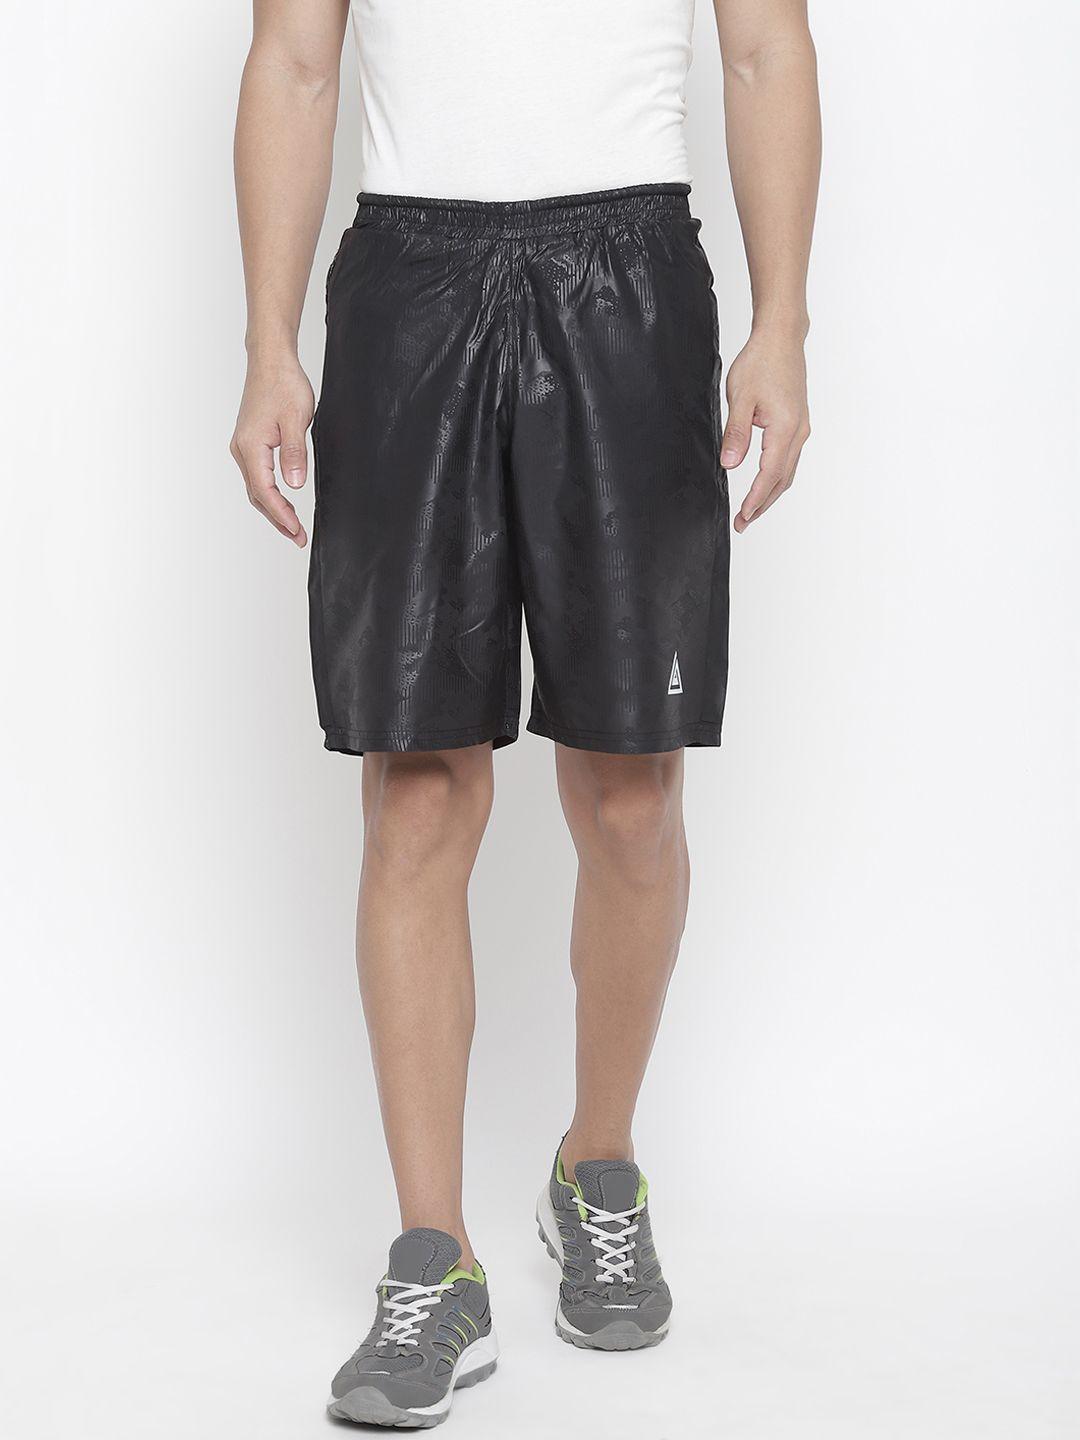 aesthetic bodies men black printed slim fit sports shorts